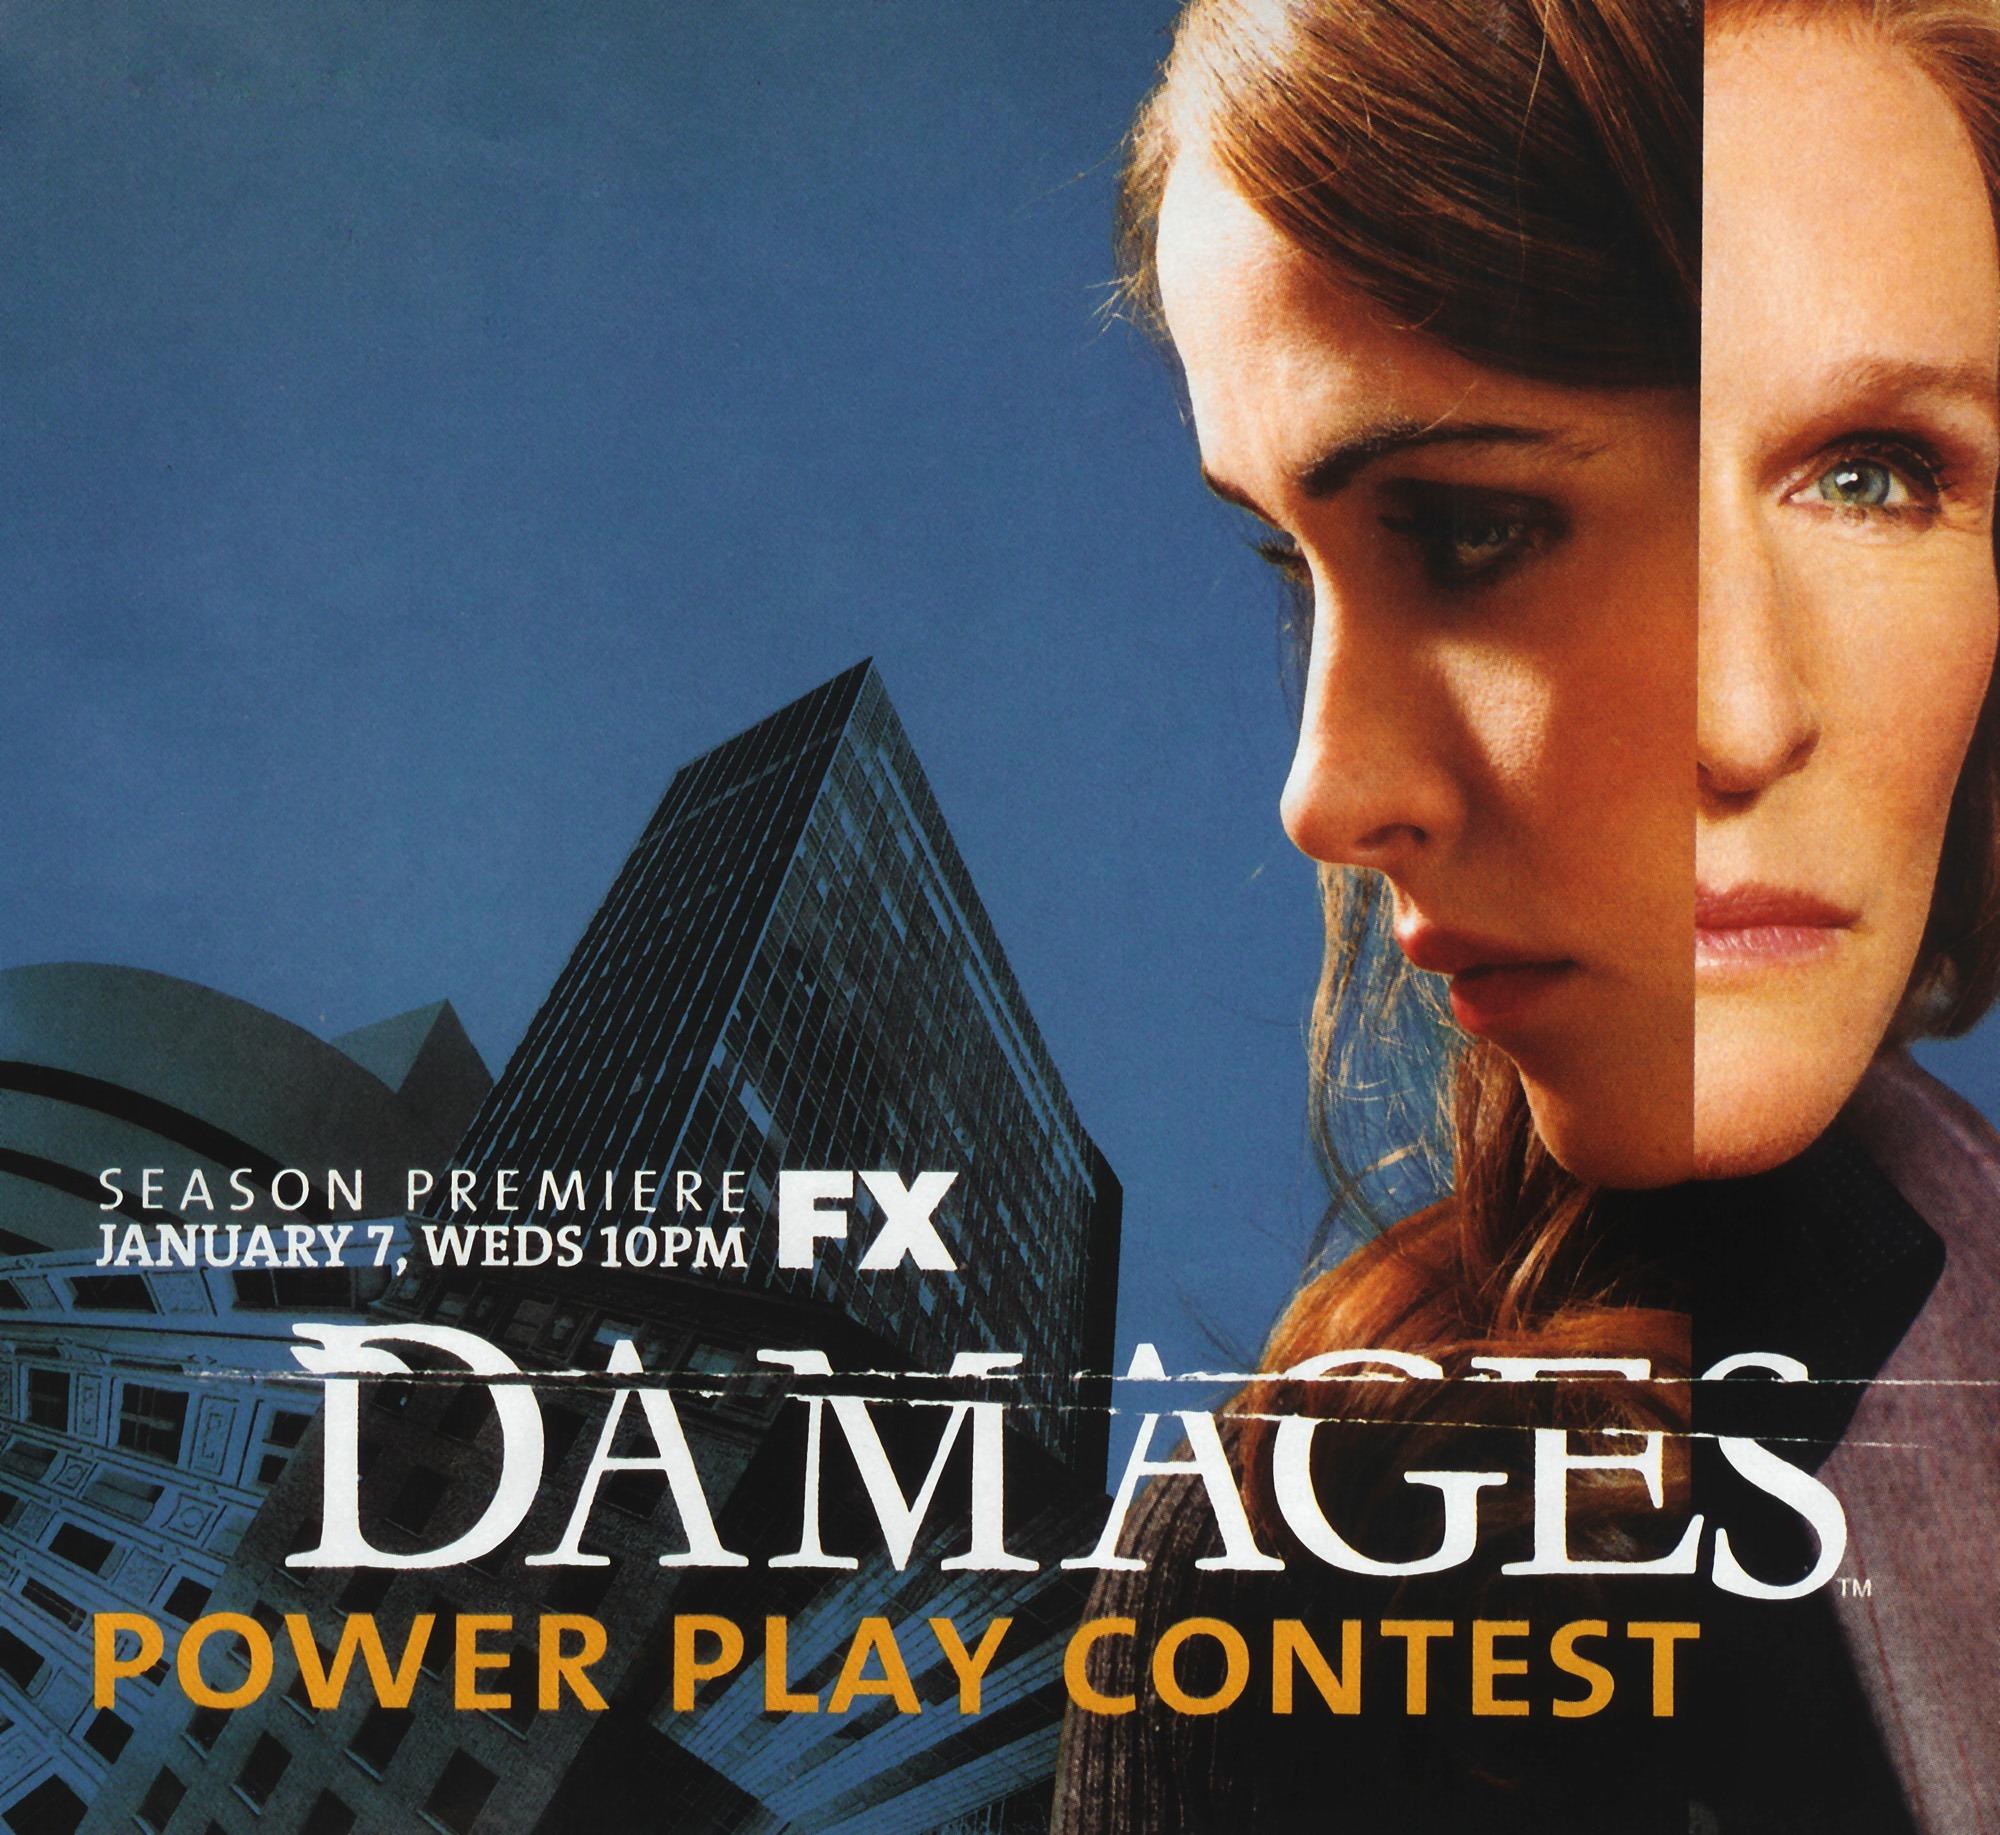 Постер фильма Схватка | Damages